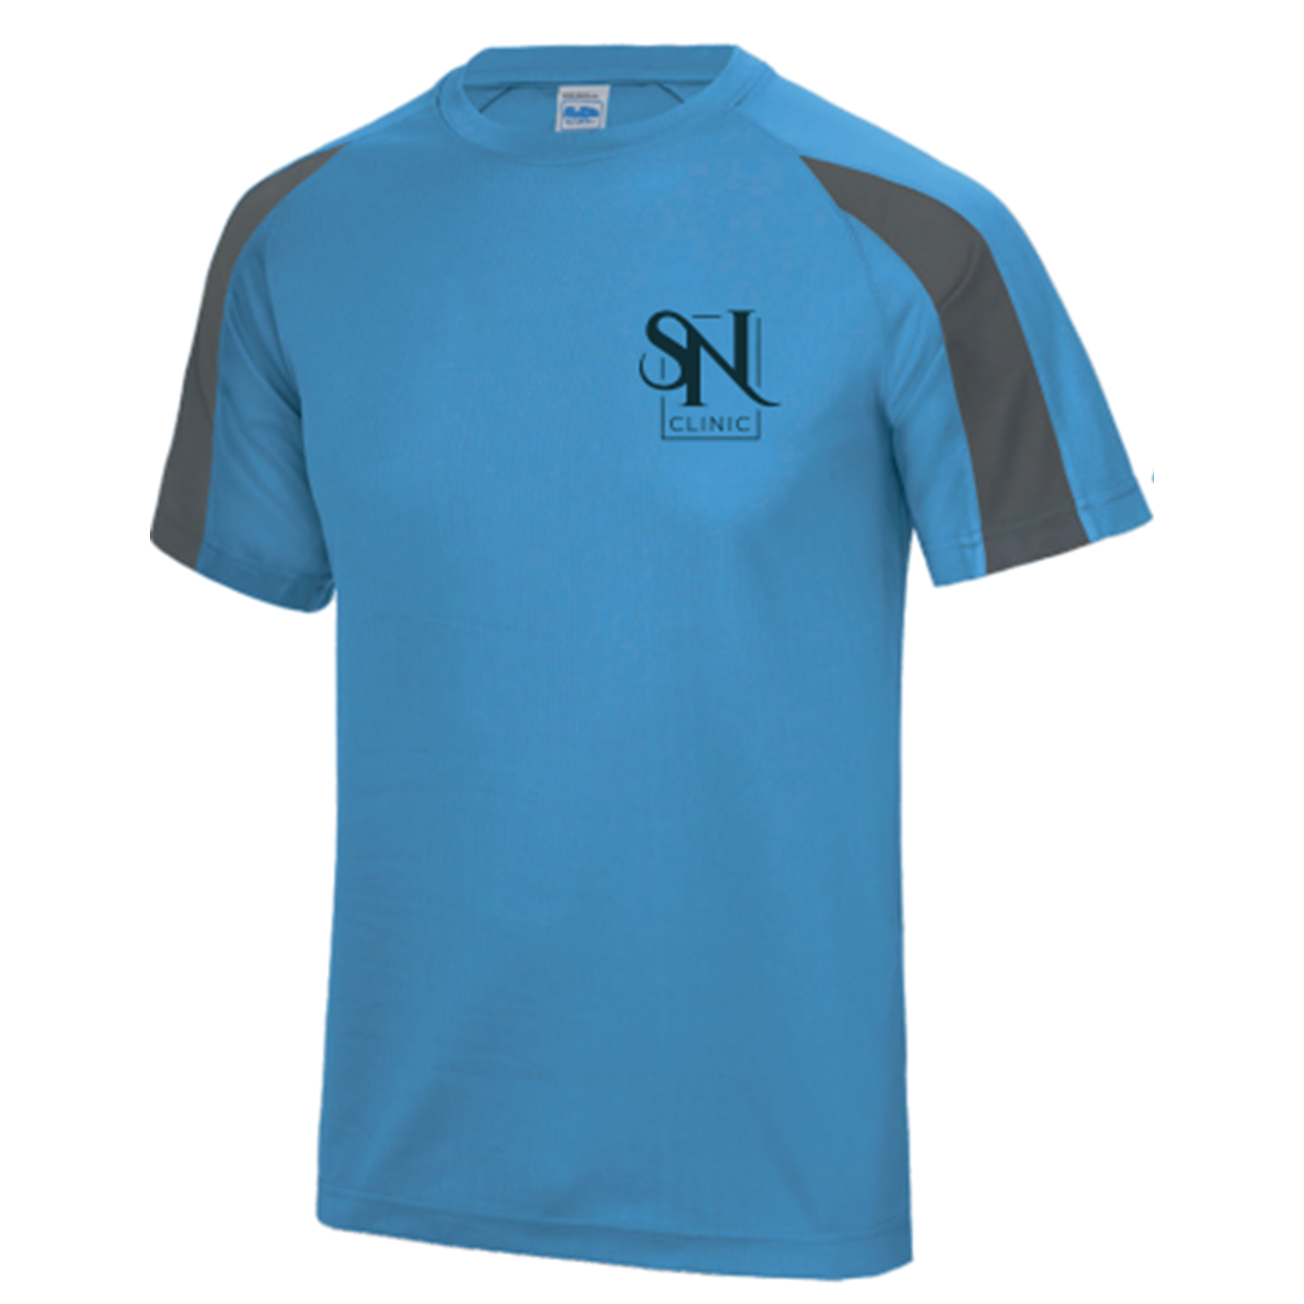 SN Clinic Contrast Cool T-Shirt [JC003]